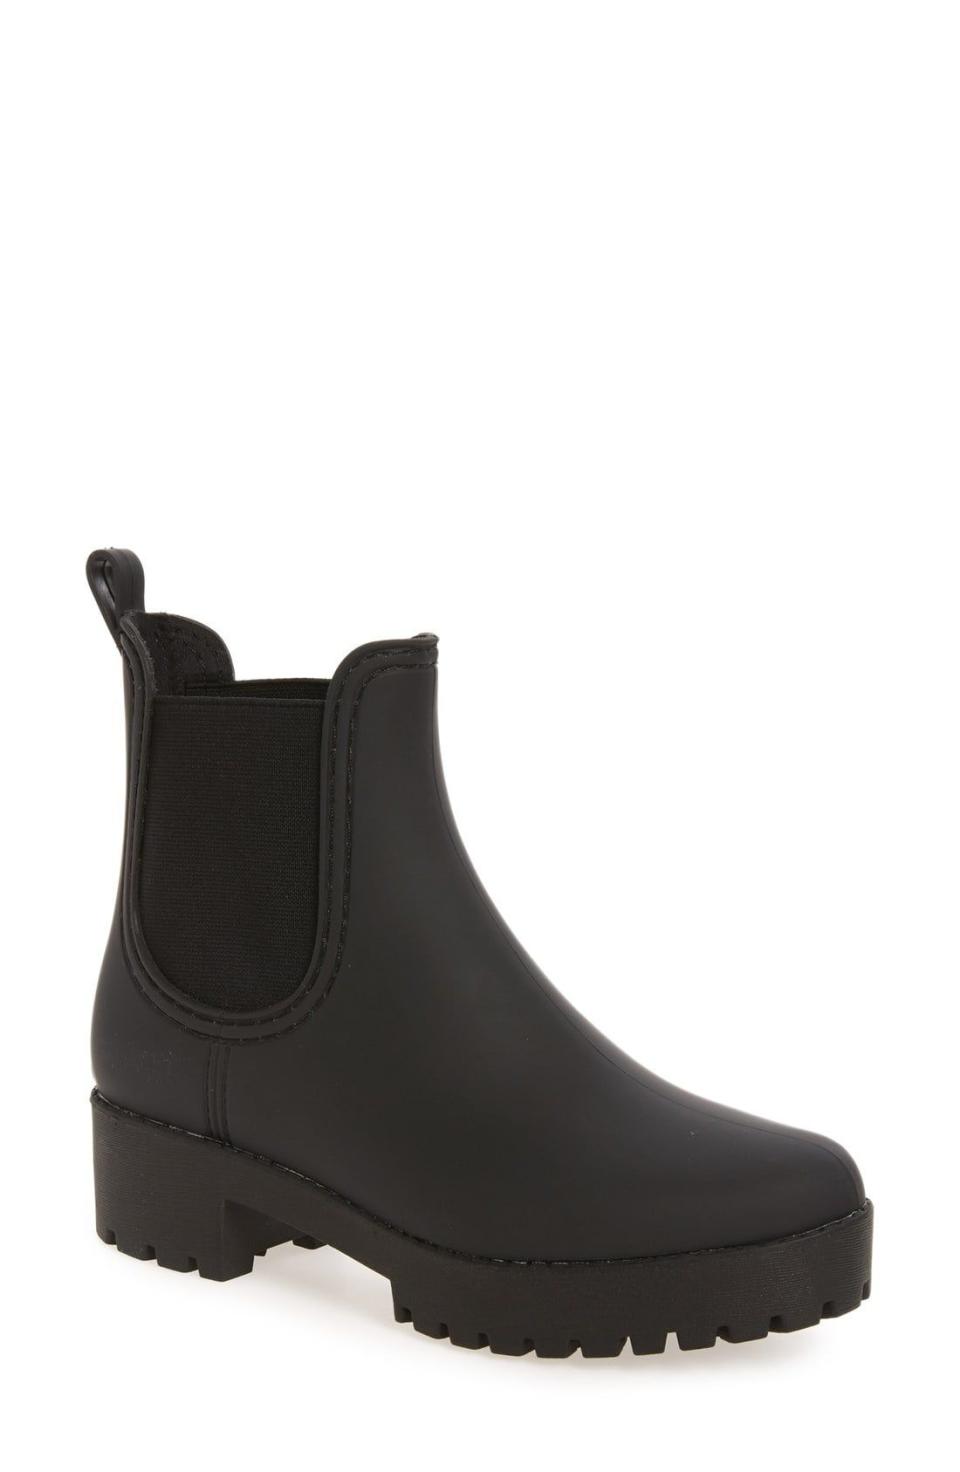 3) Waterproof Chelsea Winter Boots